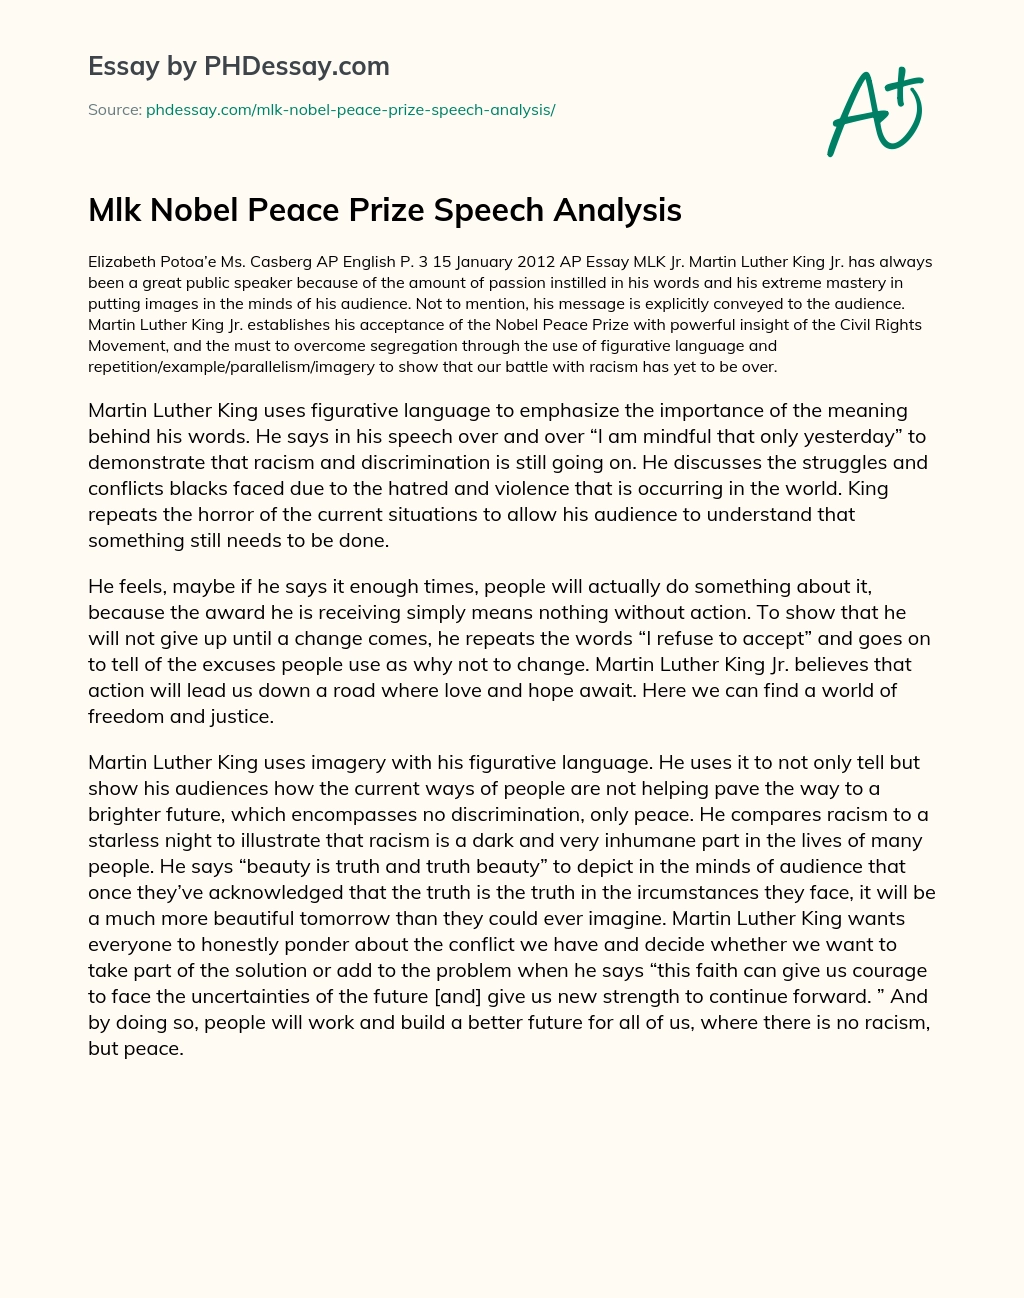 Mlk Nobel Peace Prize Speech Analysis essay